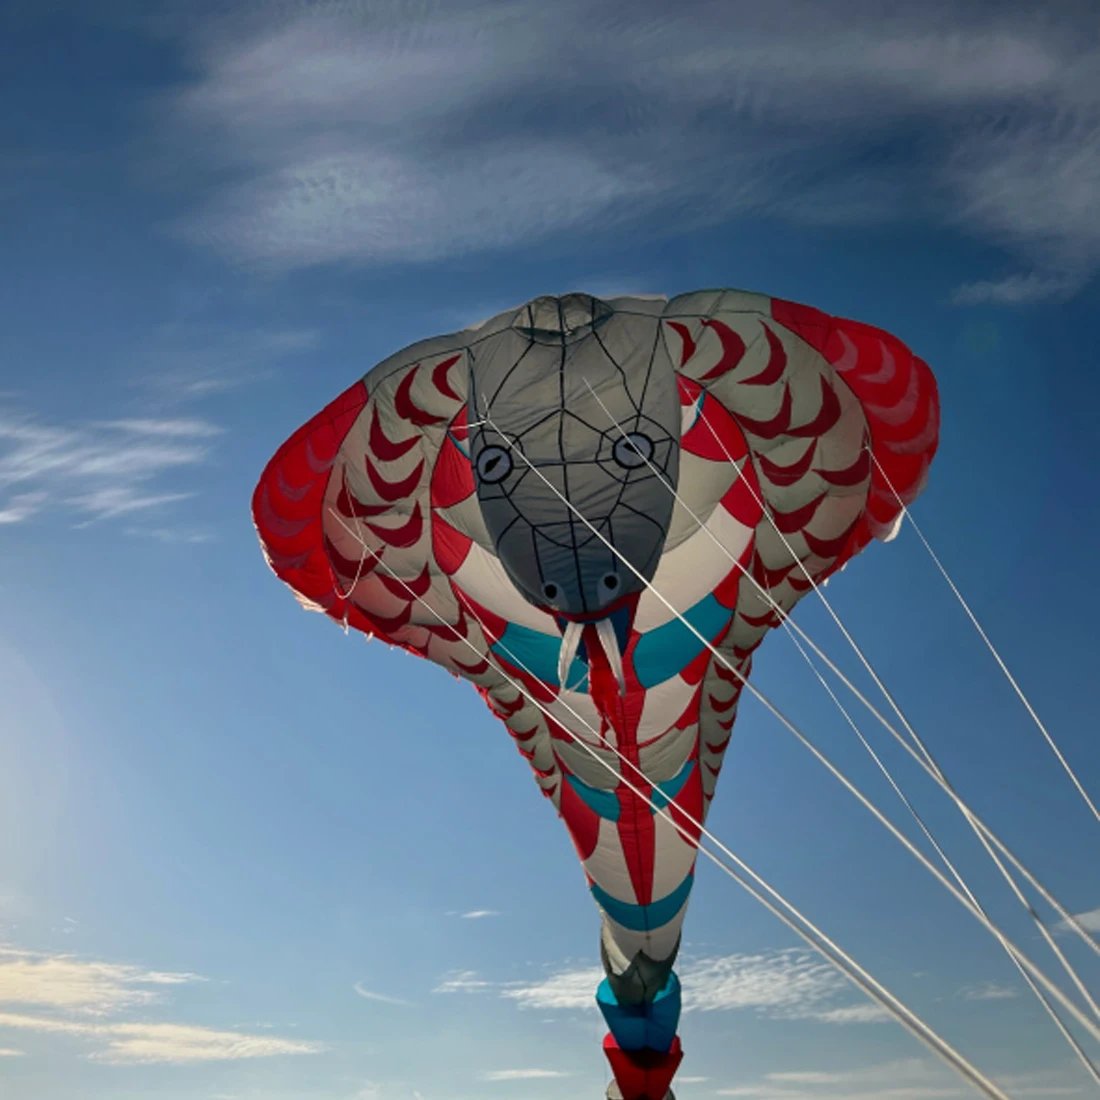 9KM 20m Cobra Kite Line Laundry Kite Pendant Soft Inflatable Show Kite for Kite Festival 30D Ripstop Nylon with Bag